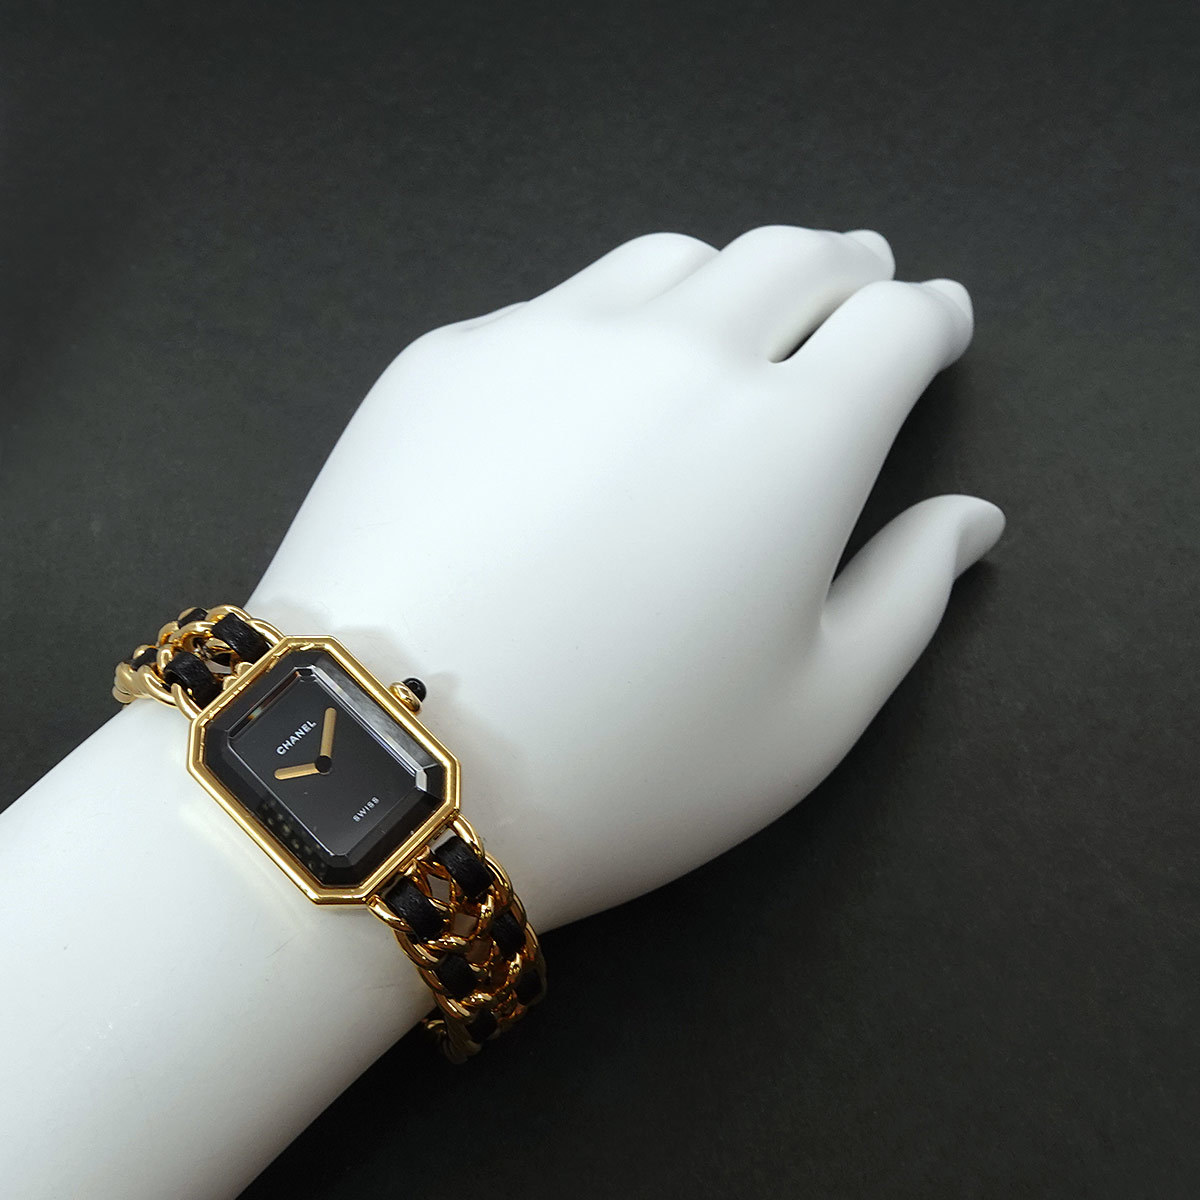  Chanel CHANEL Premiere L размер H0001 Vintage женские наручные часы черный циферблат Gold часы Premiere 90219662